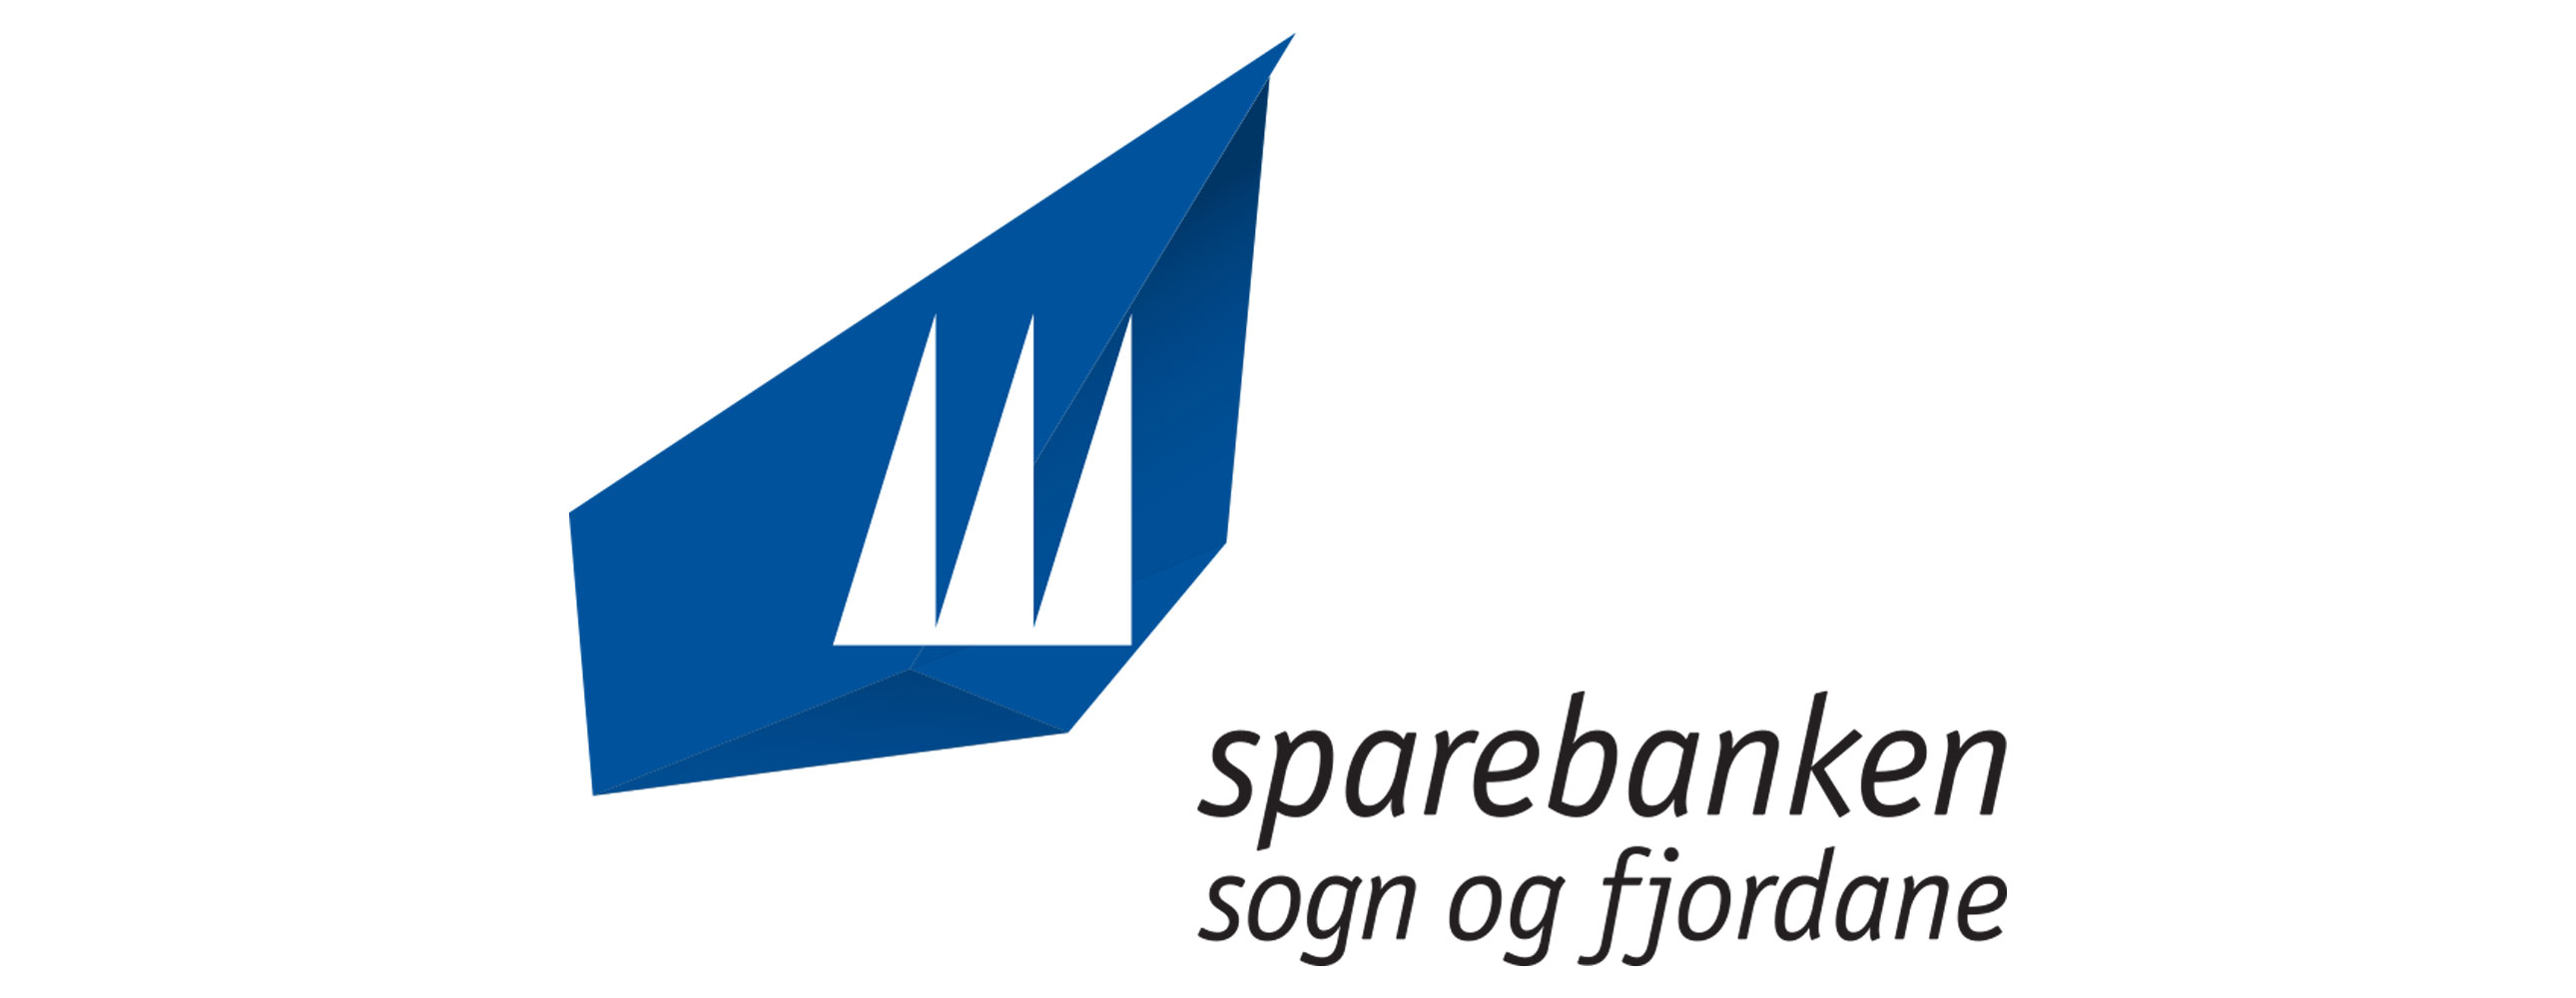 Sparebanken Sogn og Fjordane-logo